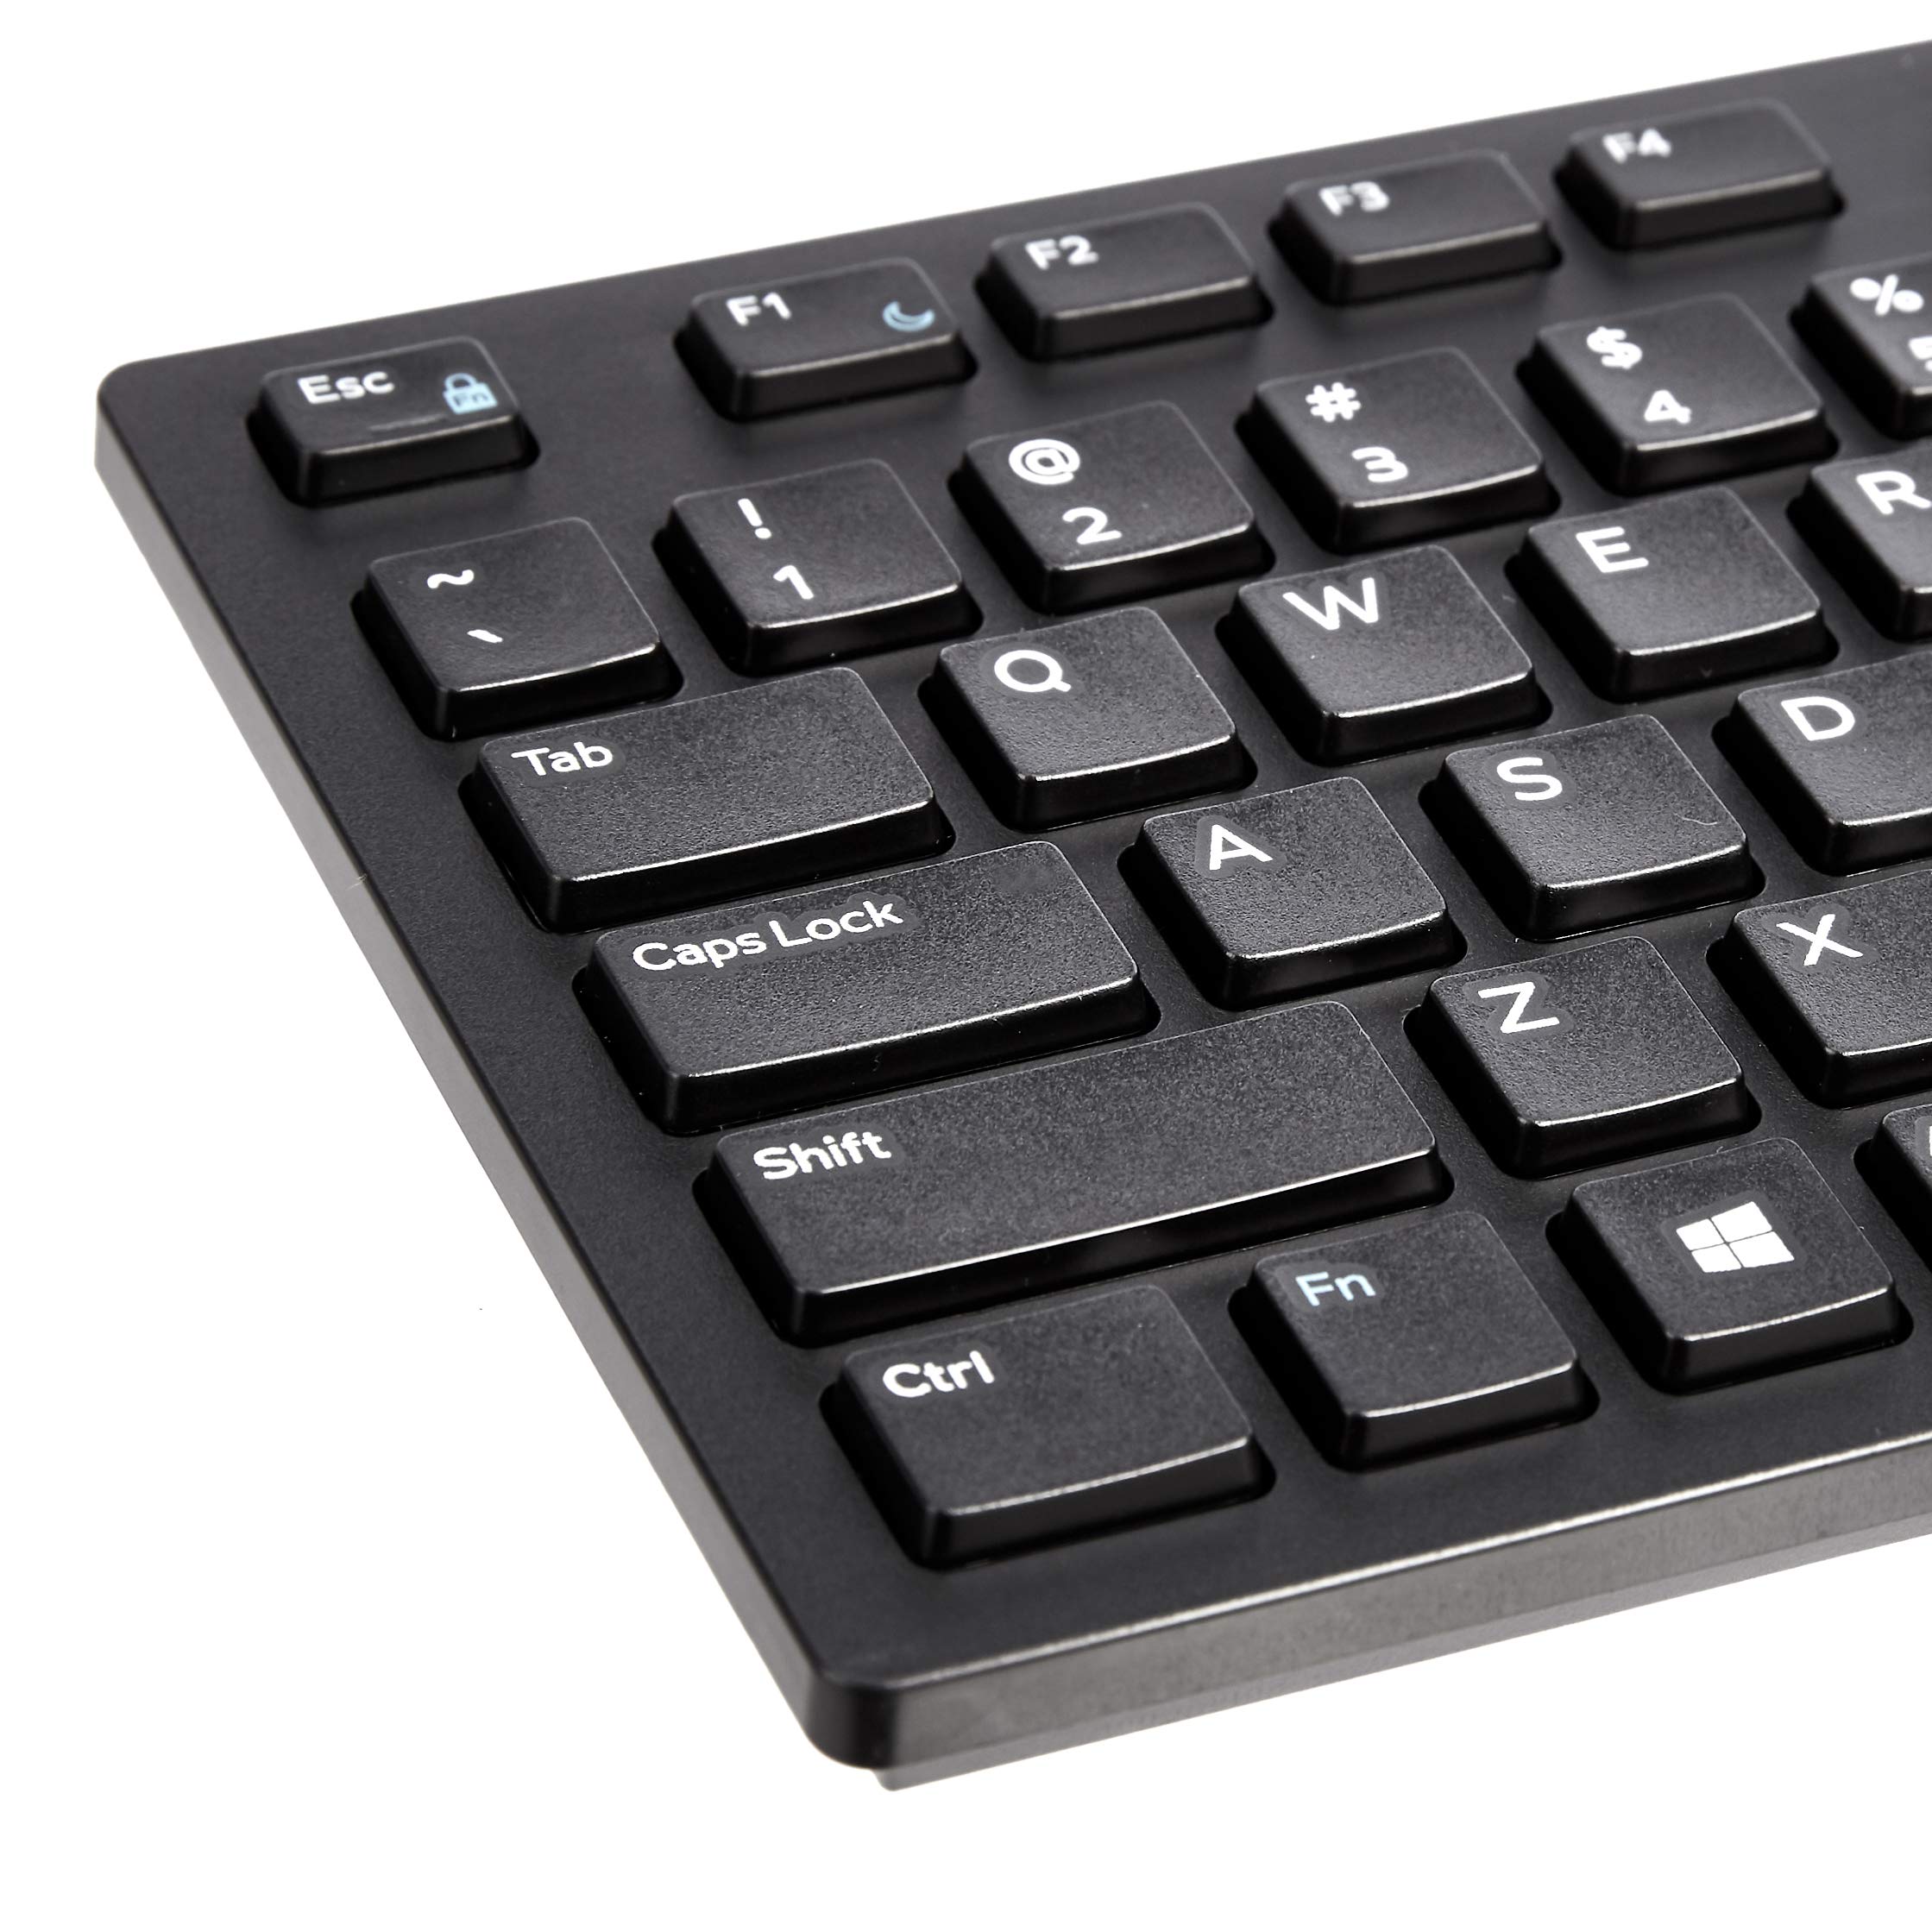 Amazon Basics Low-Profile Wired USB Keyboard with US Layout (QWERTY), Matte Black